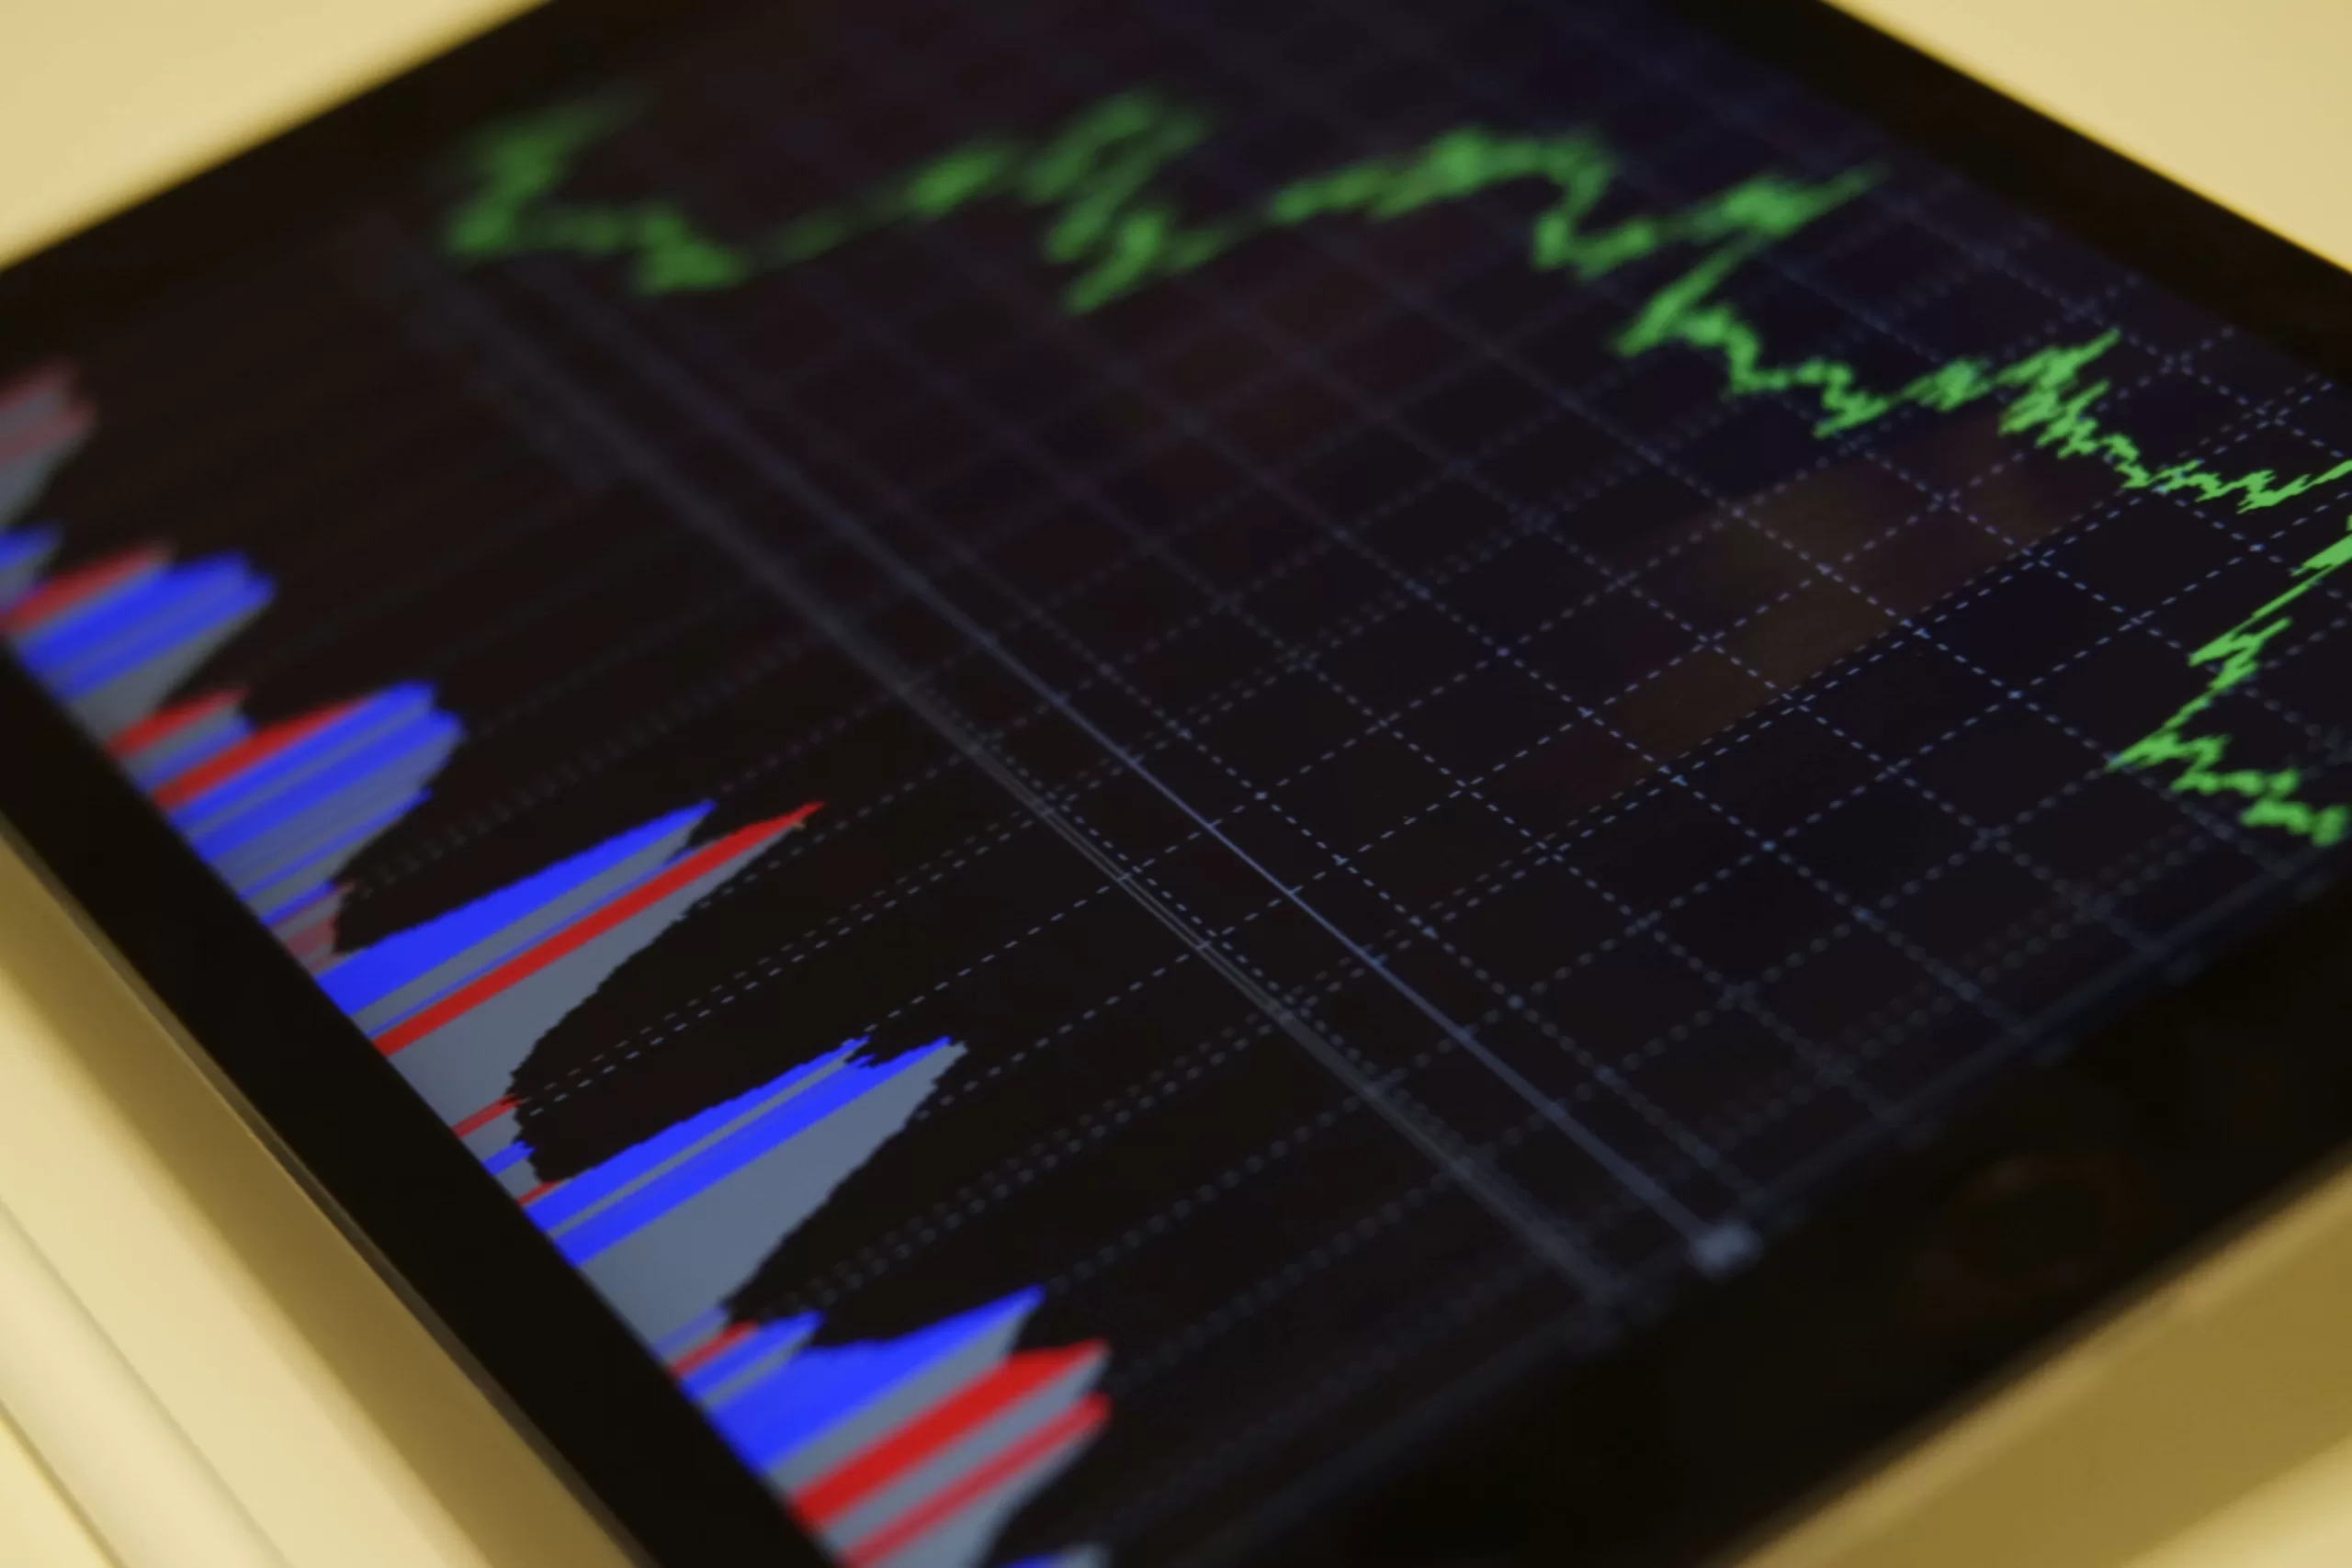 Stock analysis chart on a ipad